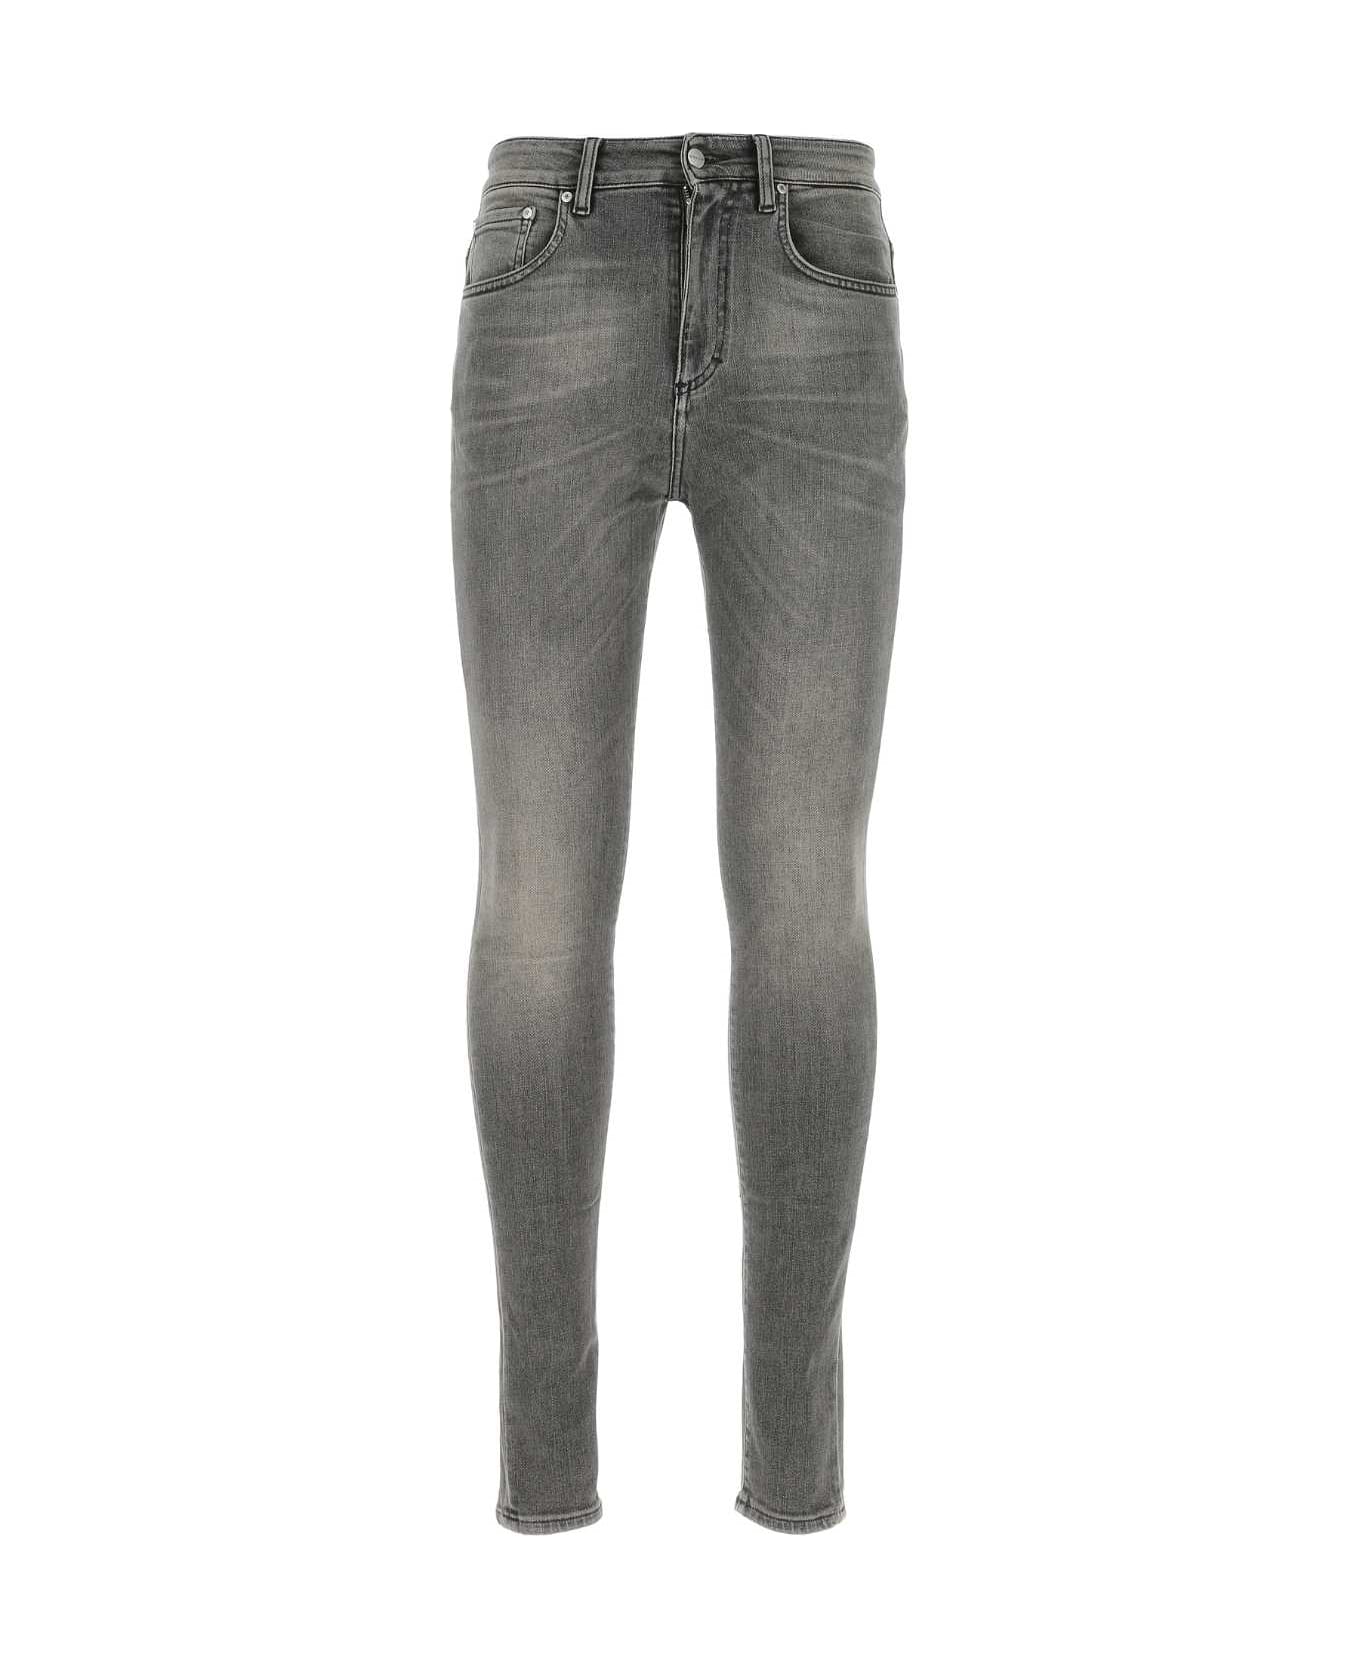 REPRESENT Black Stretch Denim Essential Jeans - 05 デニム